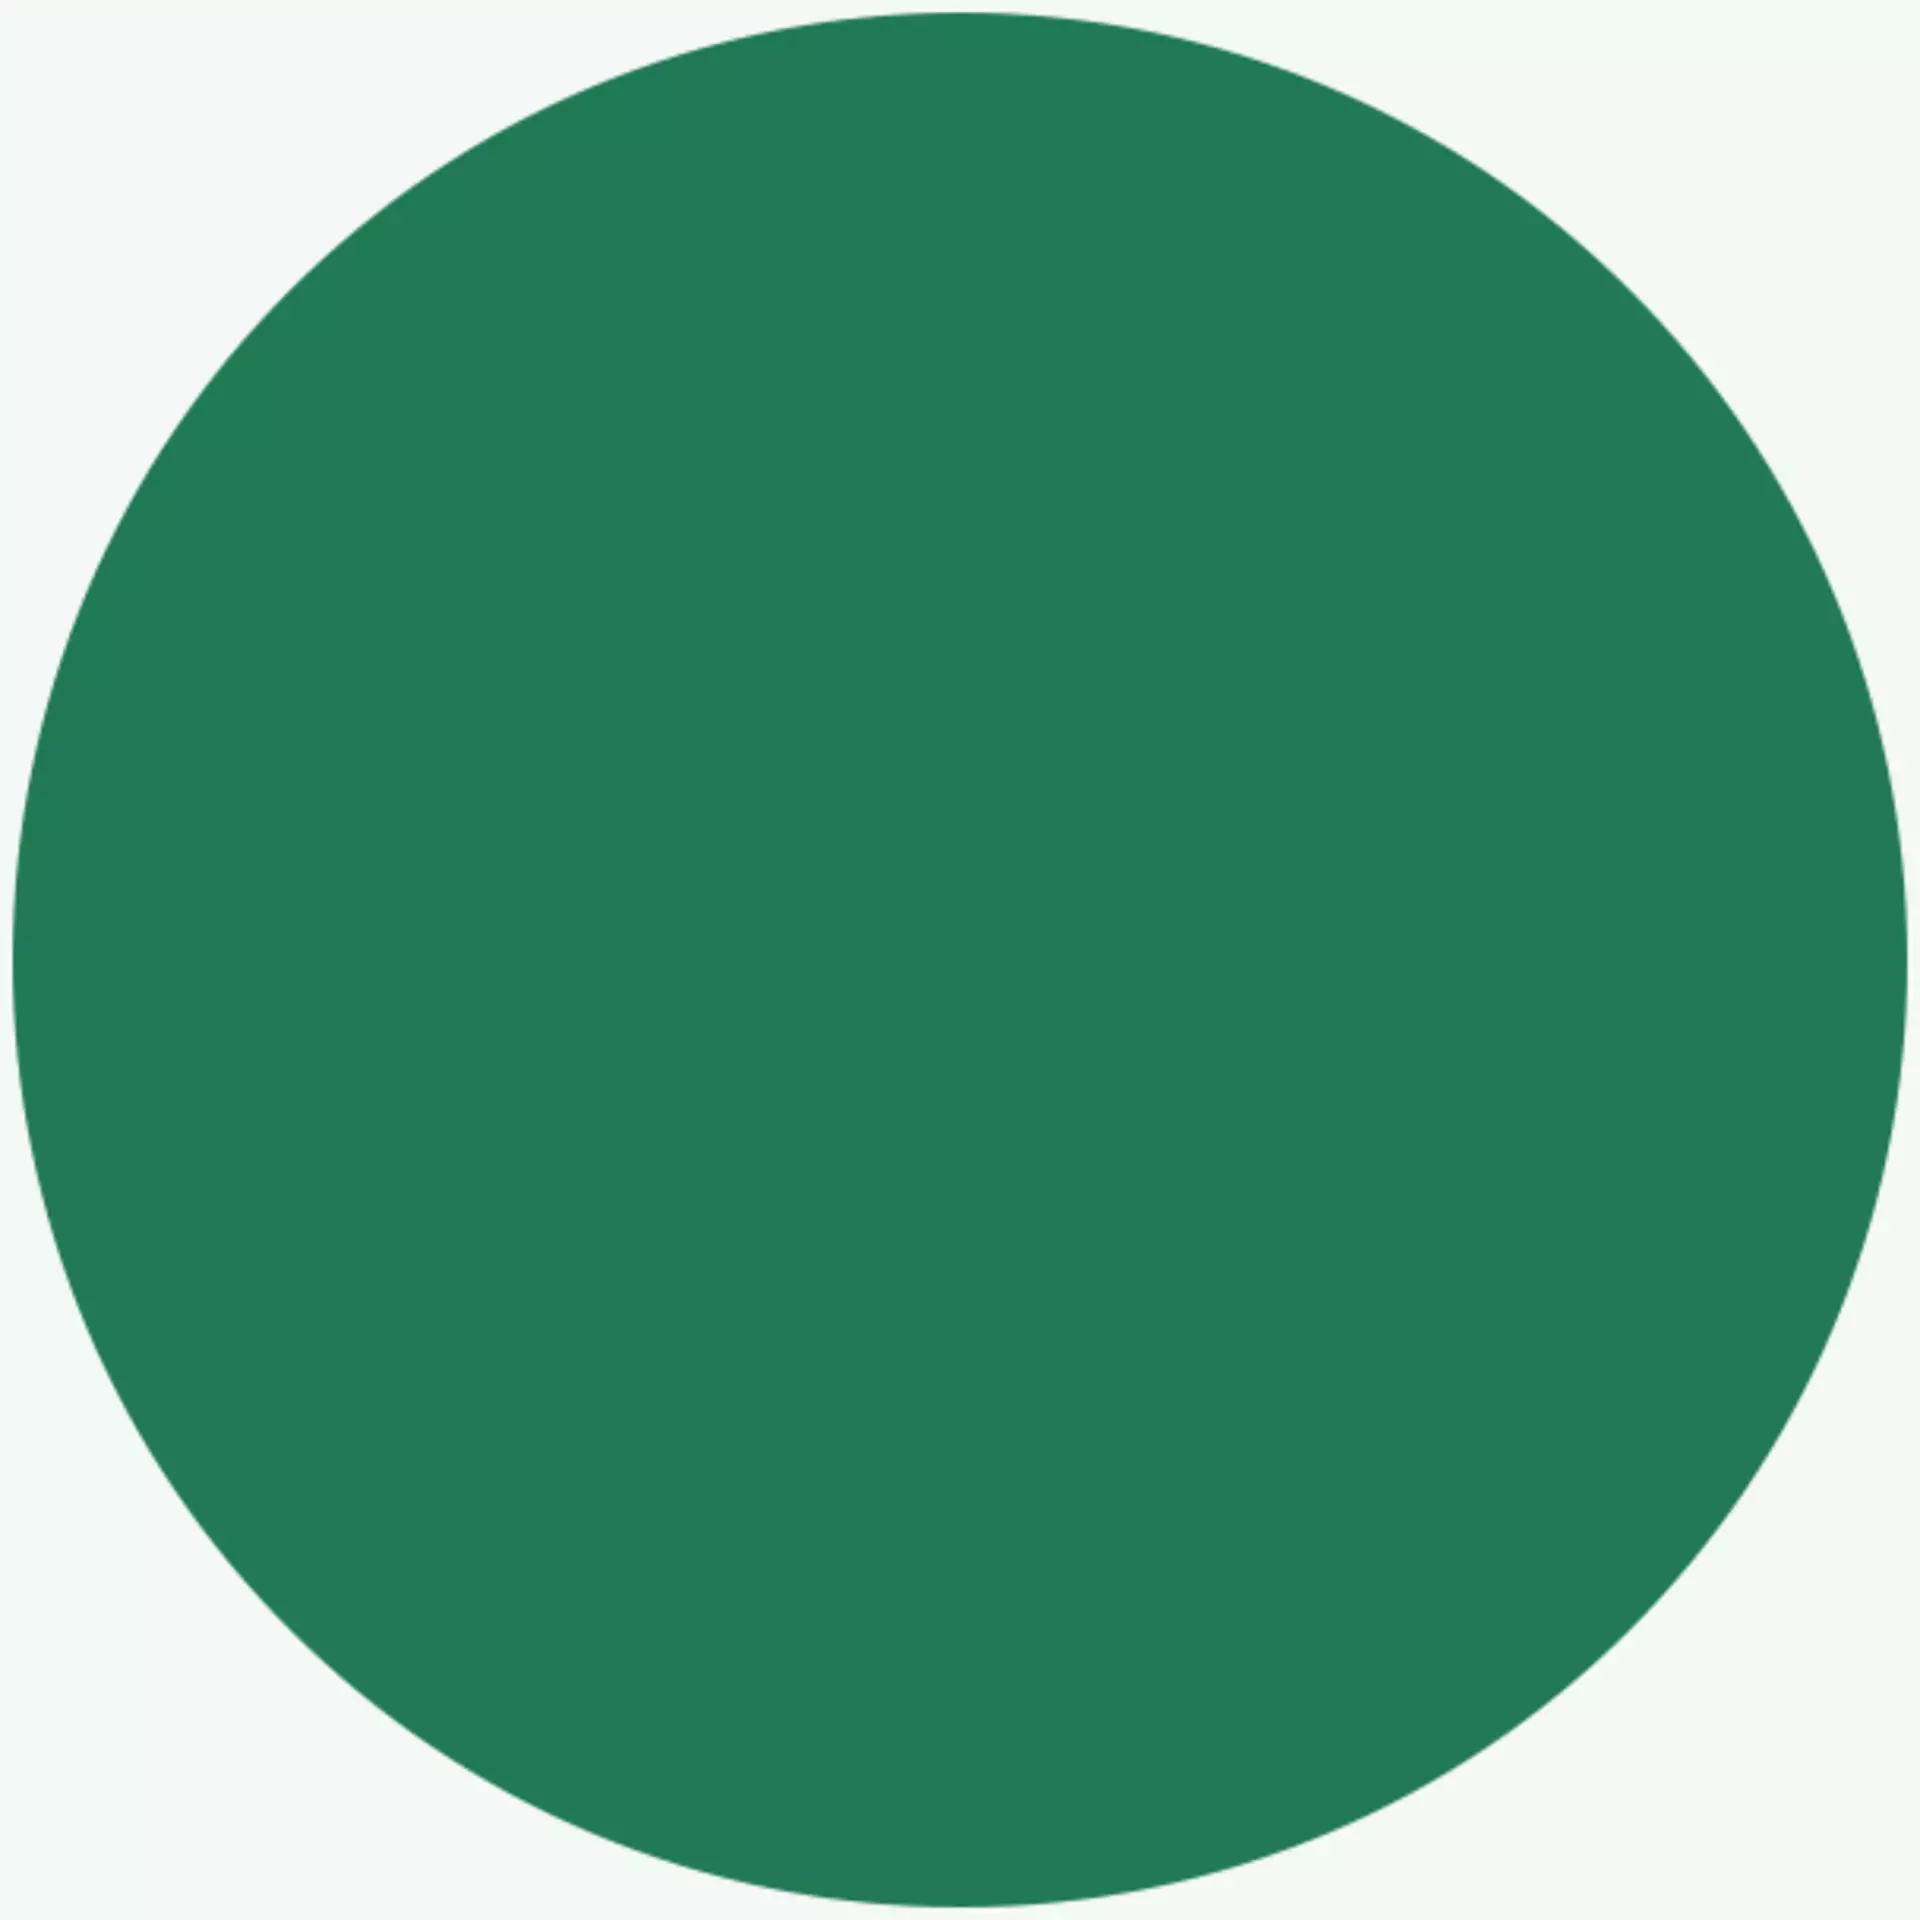 Smaragdgrün - der Royal Green  Farbton, der an den weiten Ozean erinnert